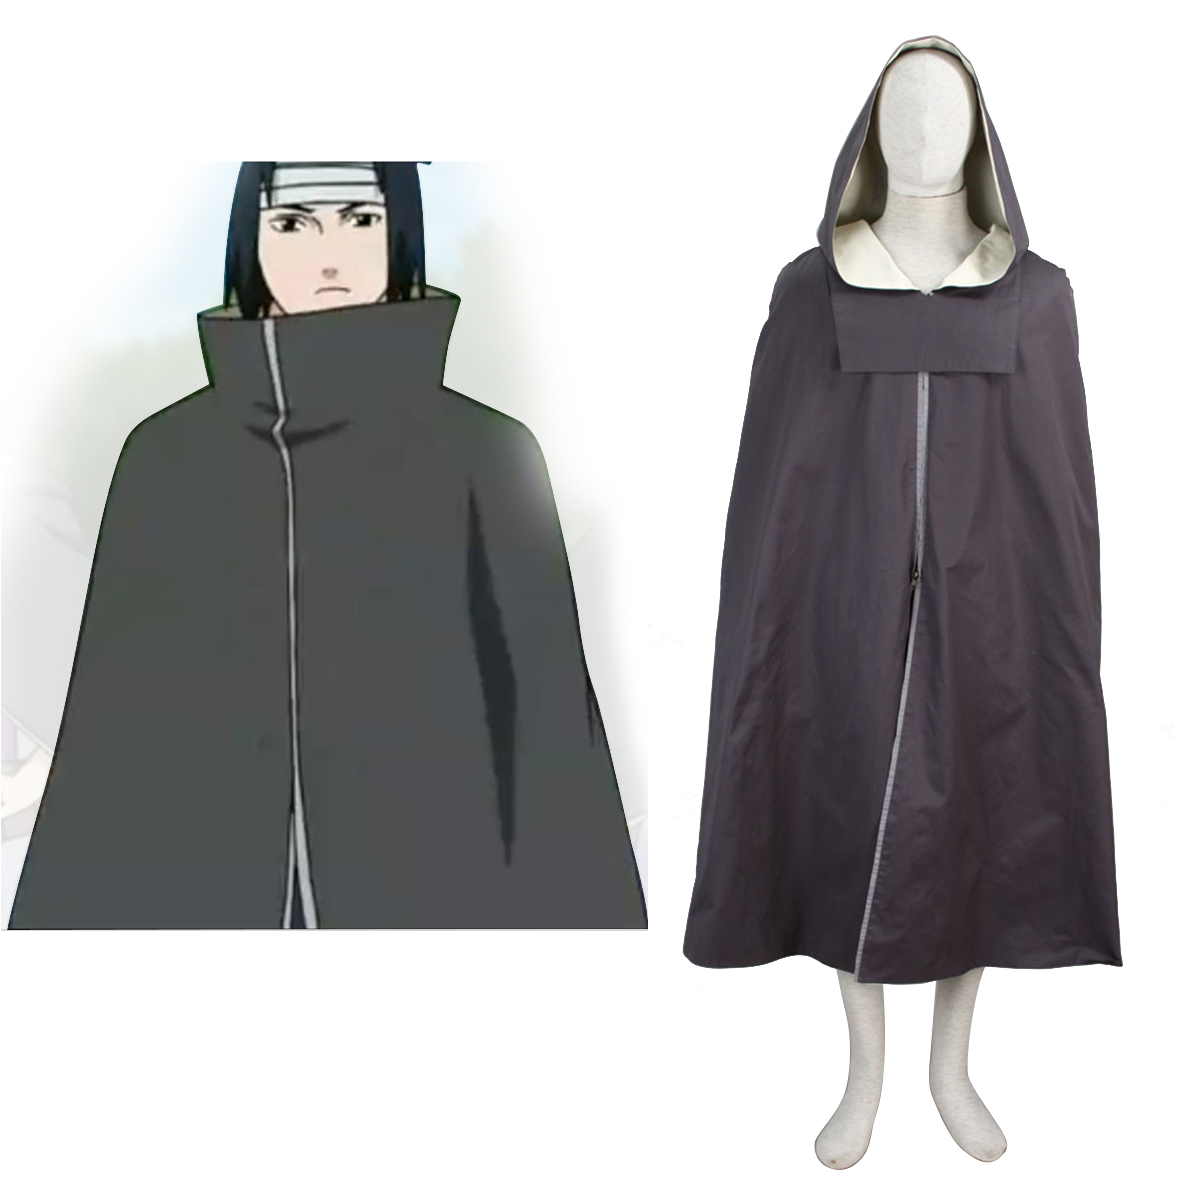 Naruto Taka Organization Cloak 1 Anime Cosplay Costumes Outfit